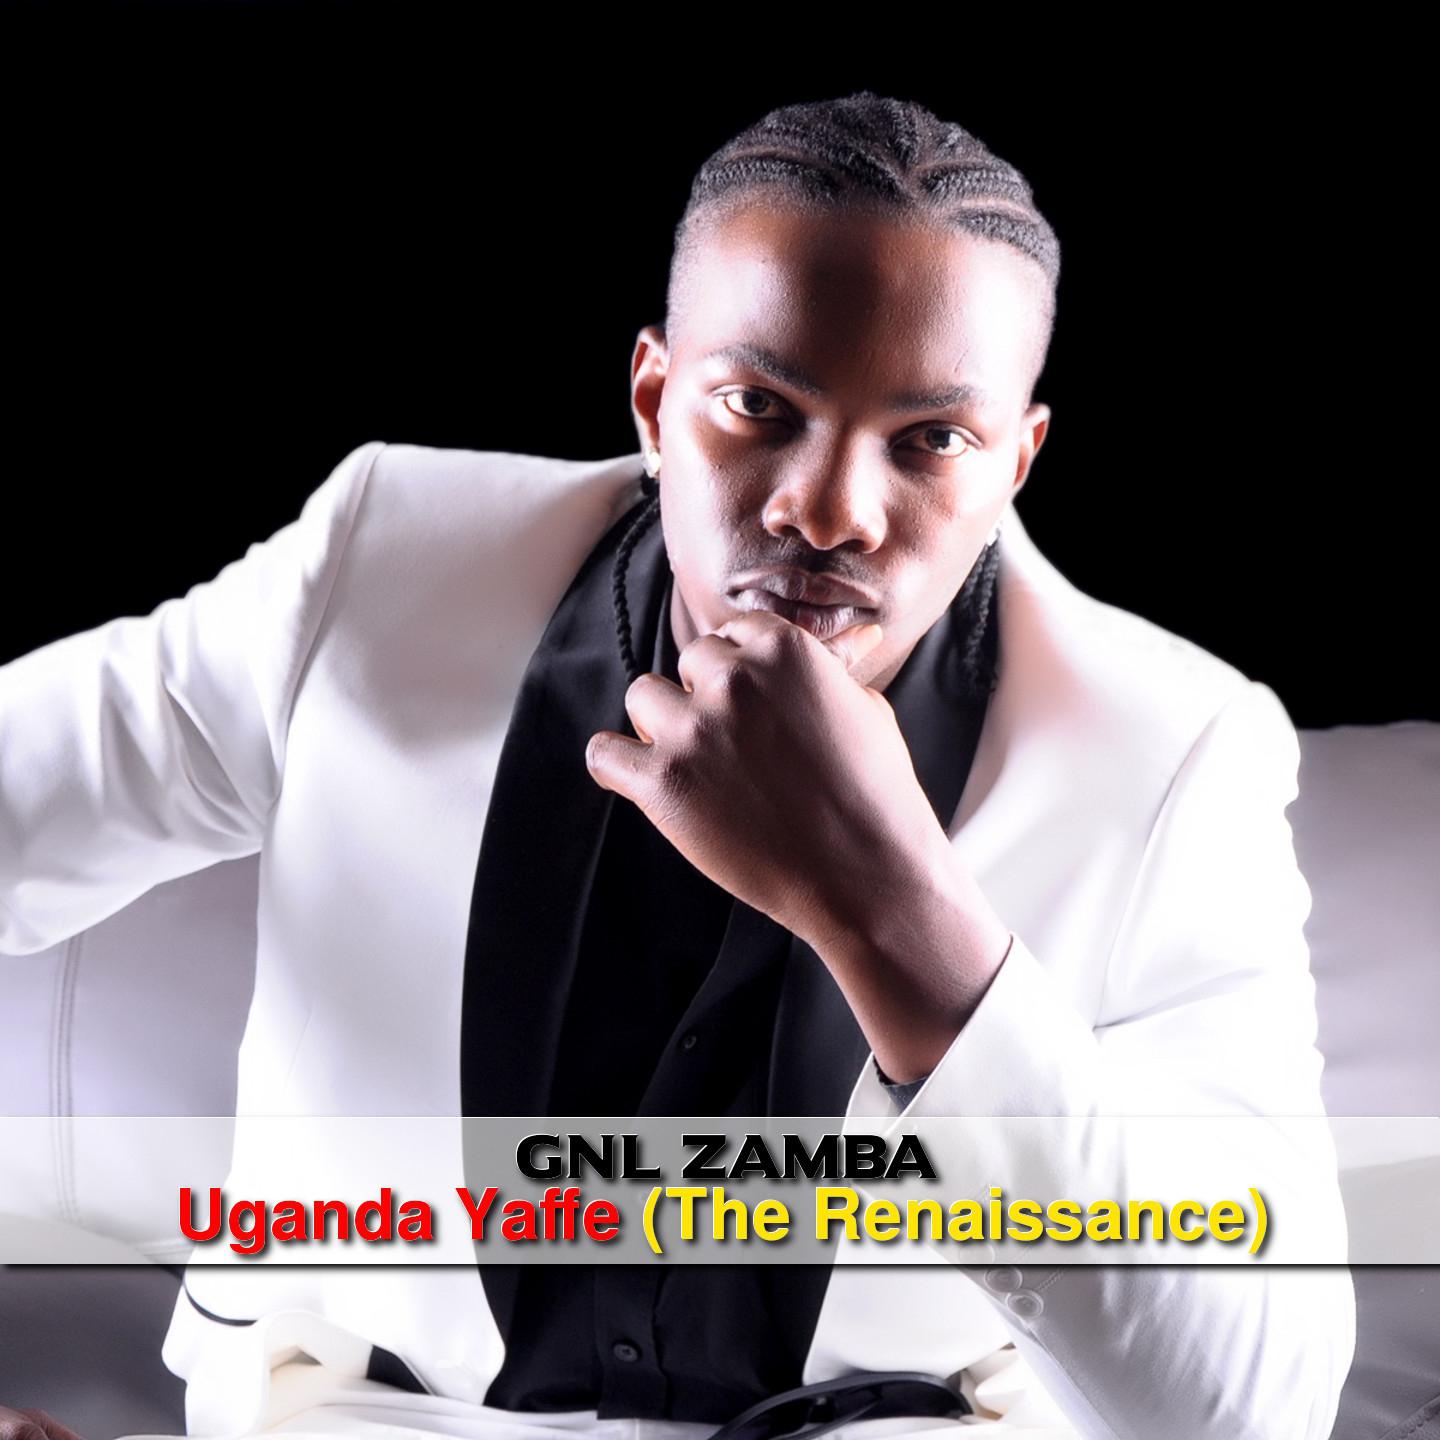 GNL Zamba - Its Going to Be Bloody